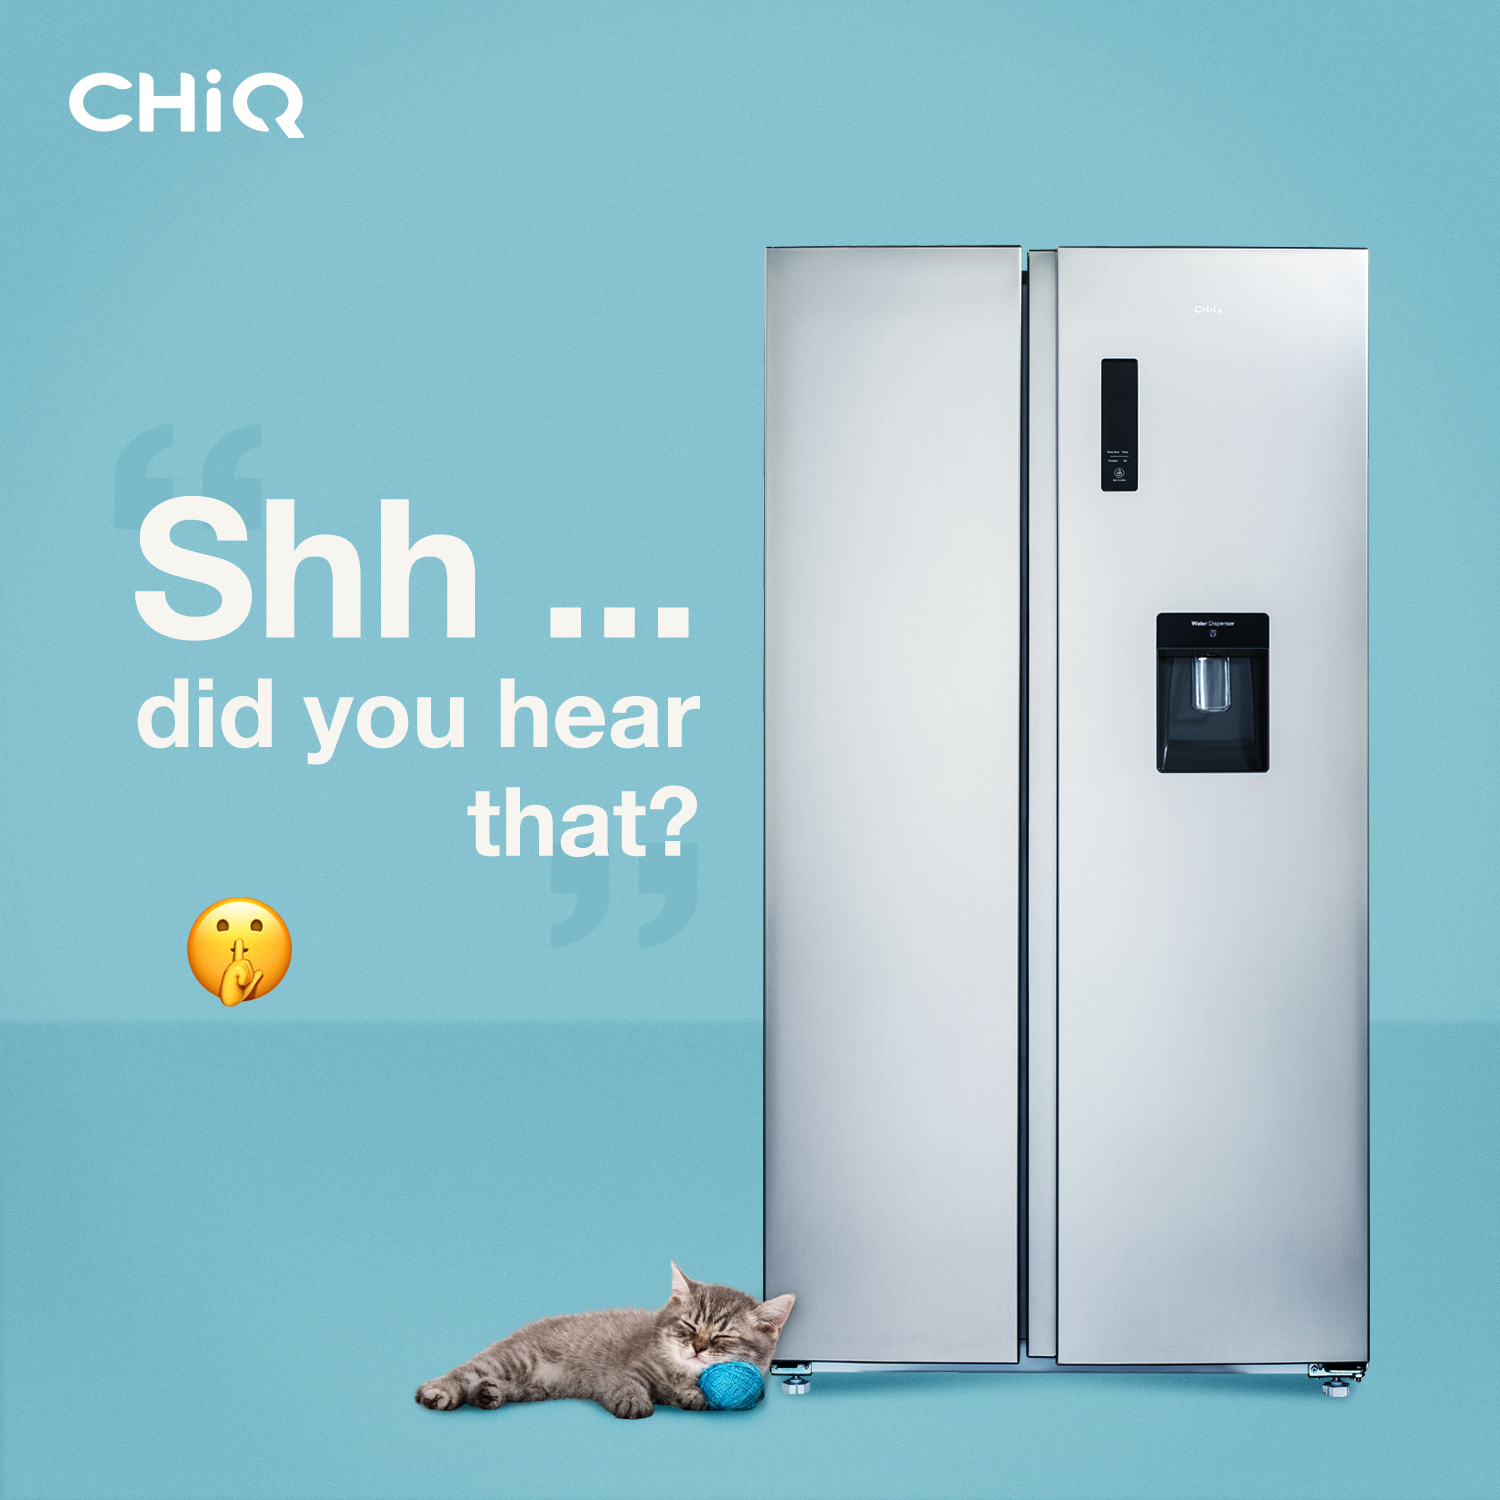 CHiQ Refrigerators: Fresher Food, Healthier Families